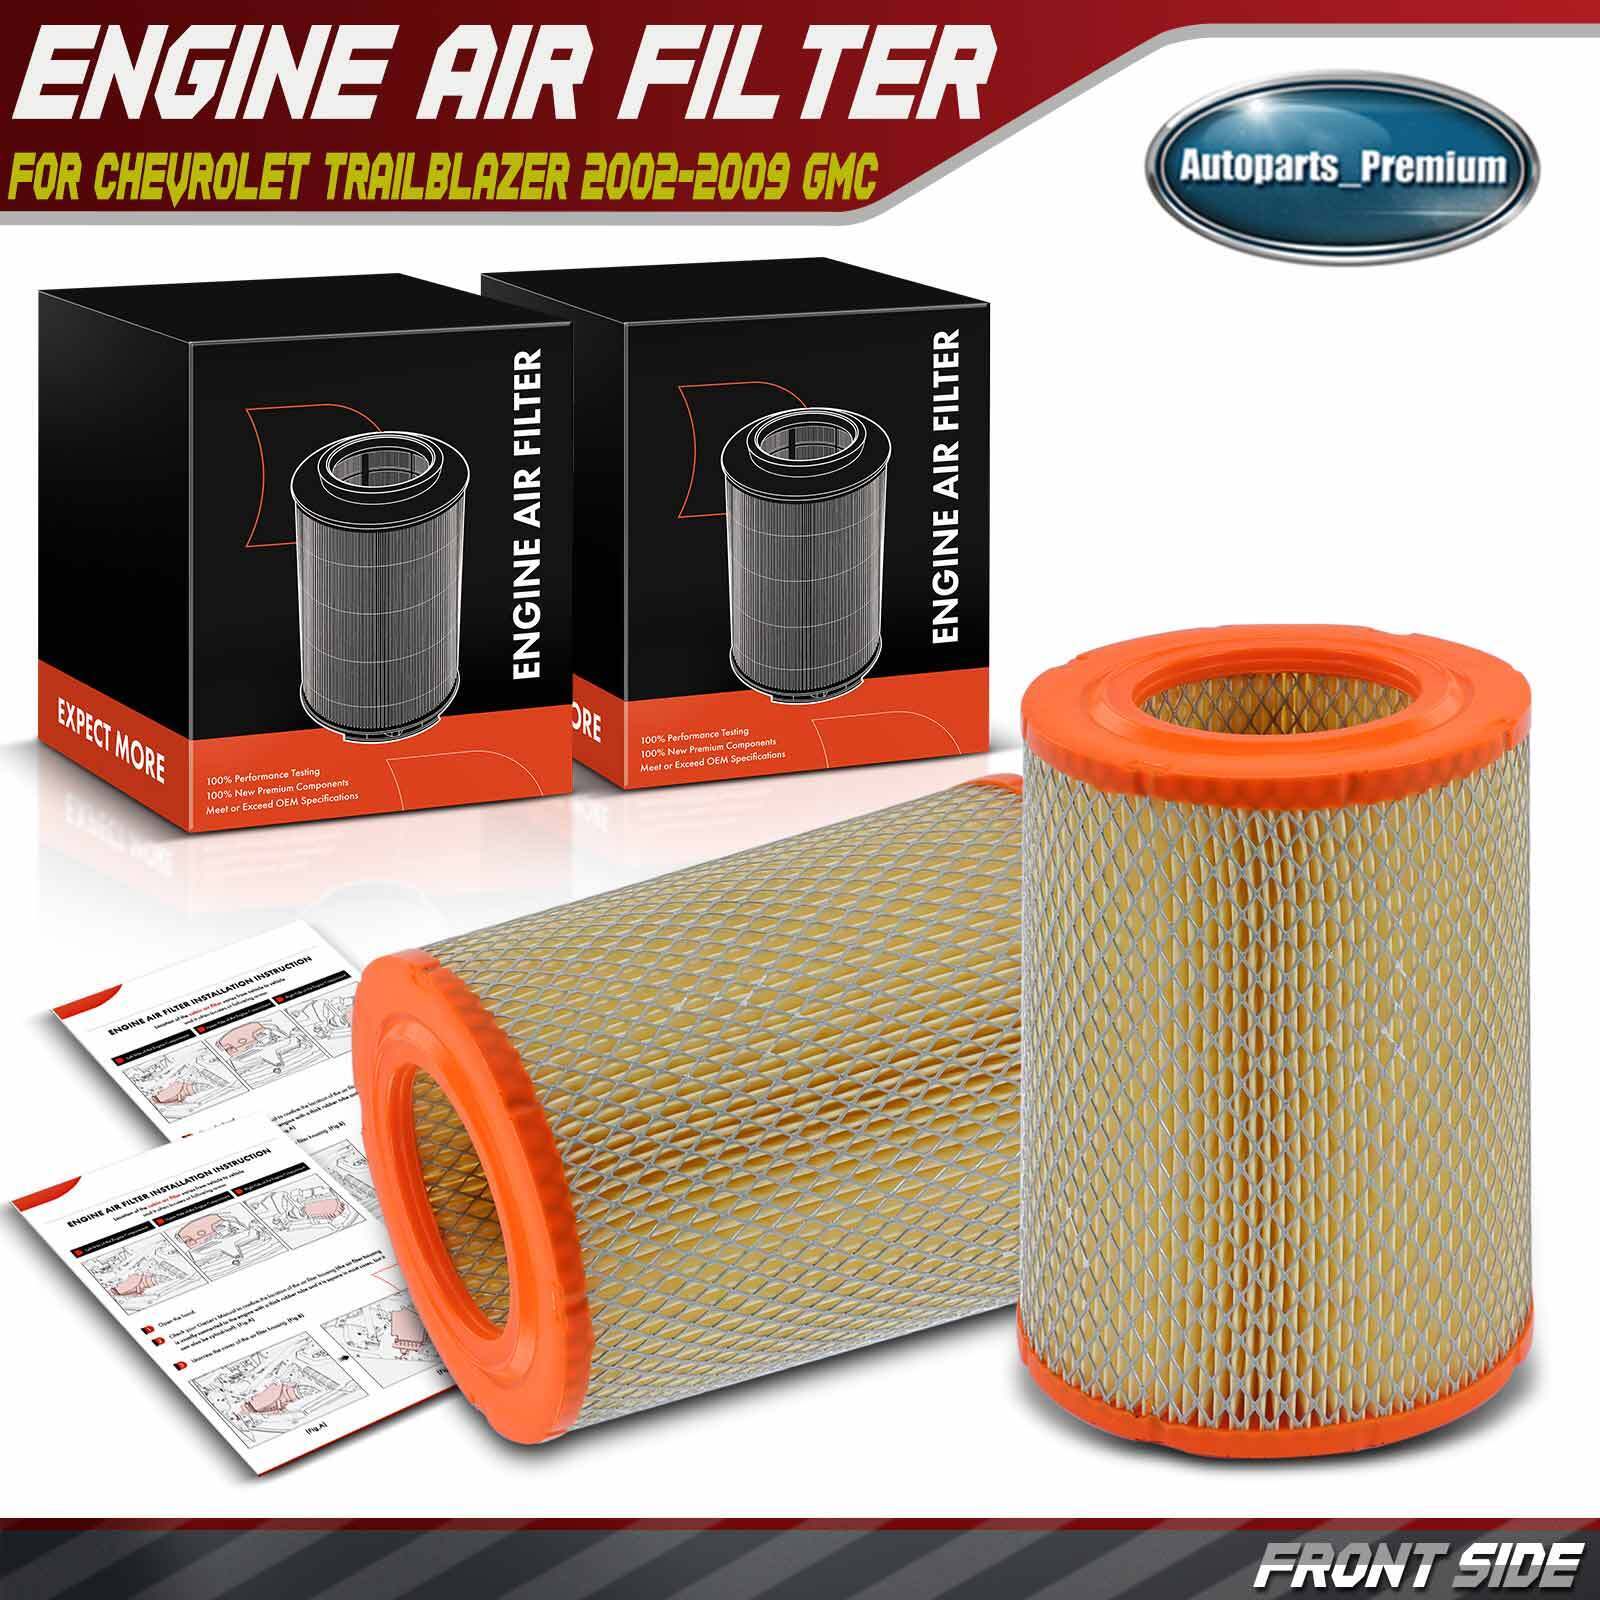 2Pcs Engine Air Filter for Chevrolet Trailblazer 2002-2009 GMC Envoy Saab Buick